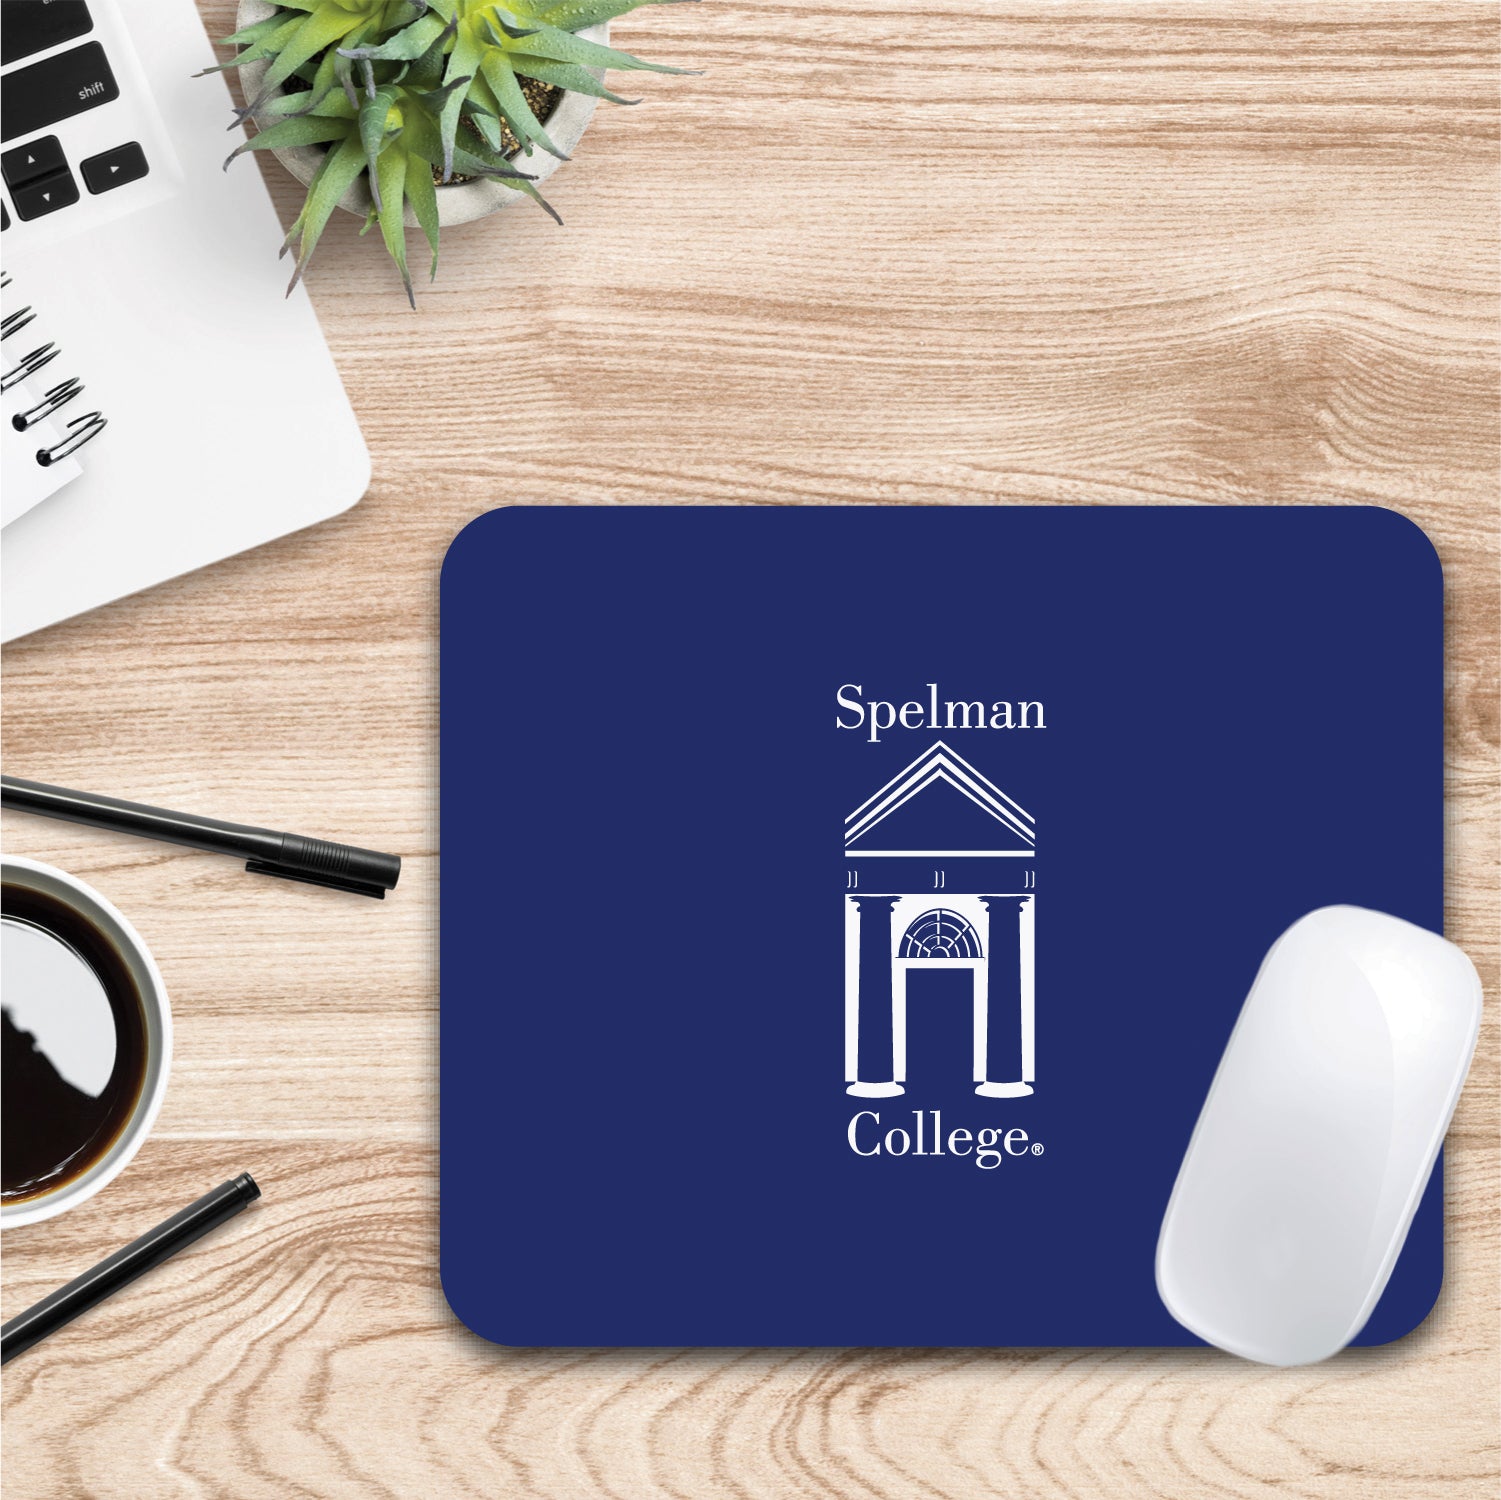 Spelman College Mouse Pad